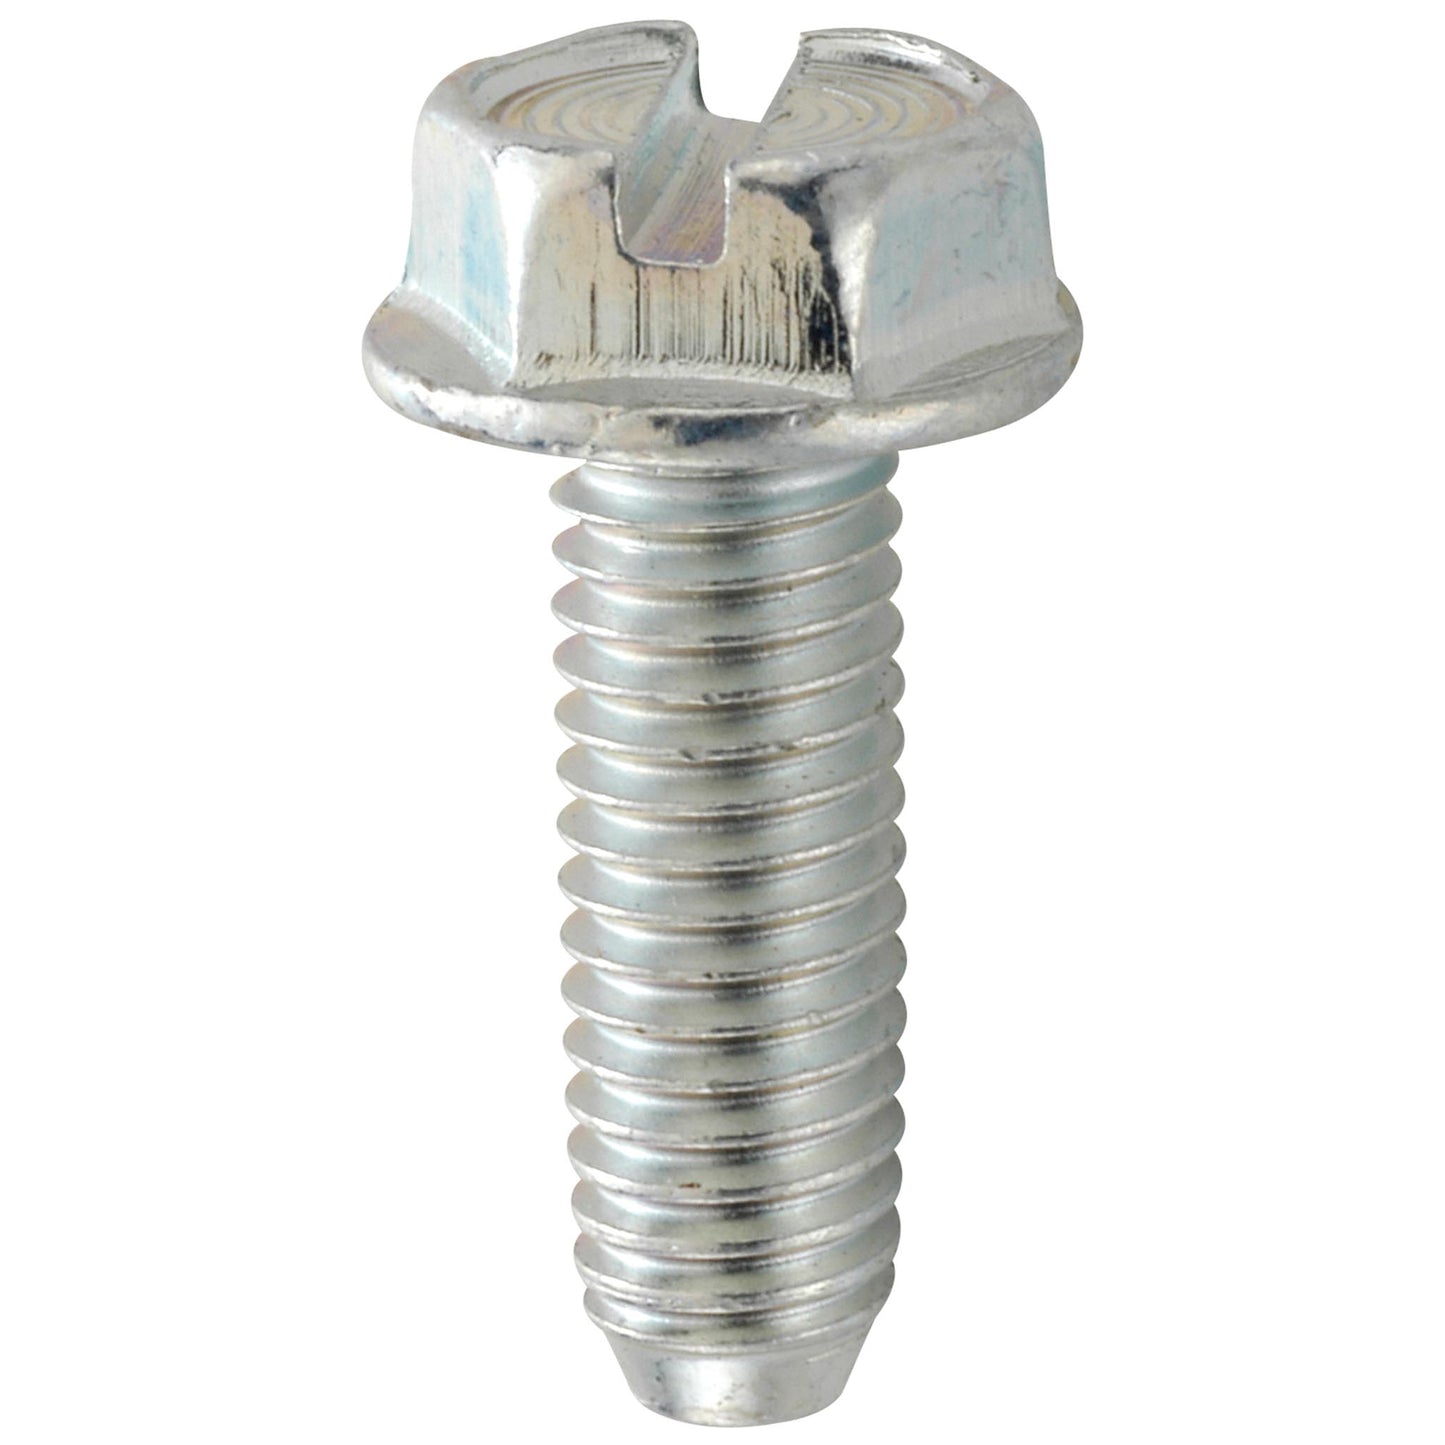 Mudguard screws M 5 x 50 galvanized steel